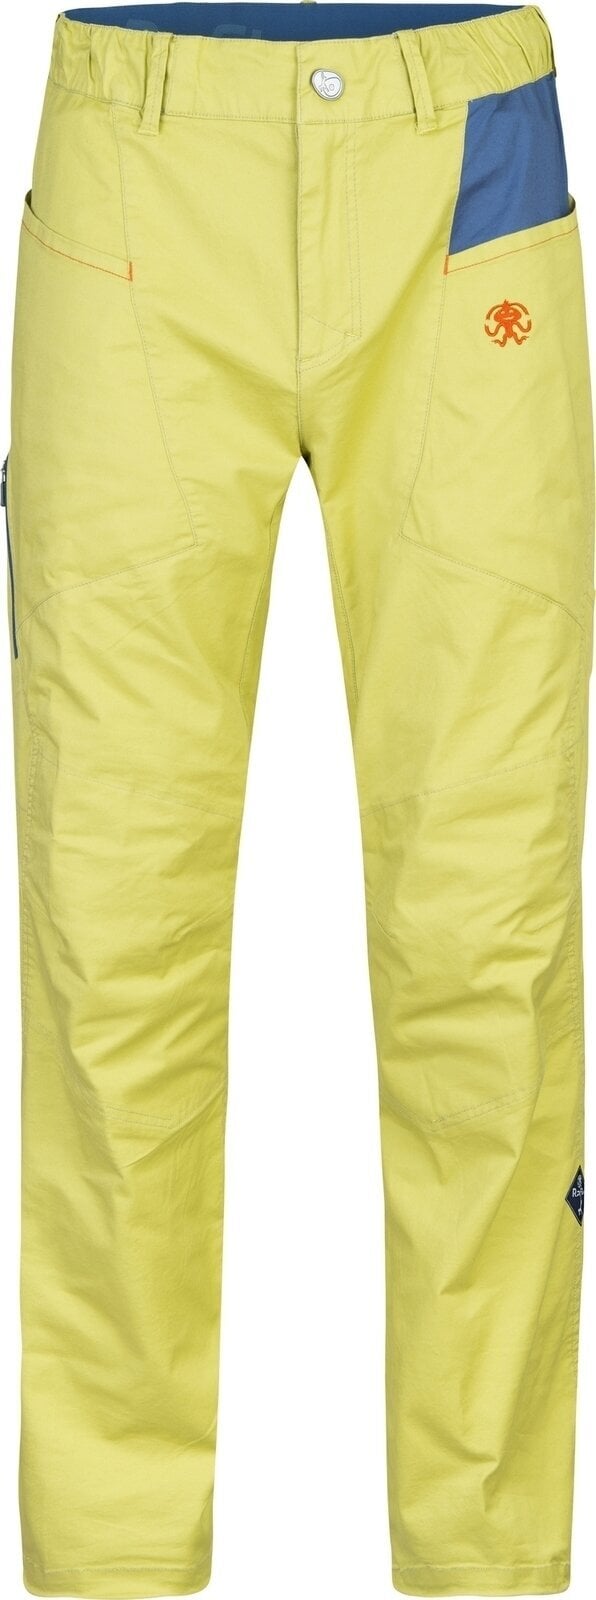 Outdoor Pants Rafiki Crag Man Pants Cress Green/Ensign S Outdoor Pants